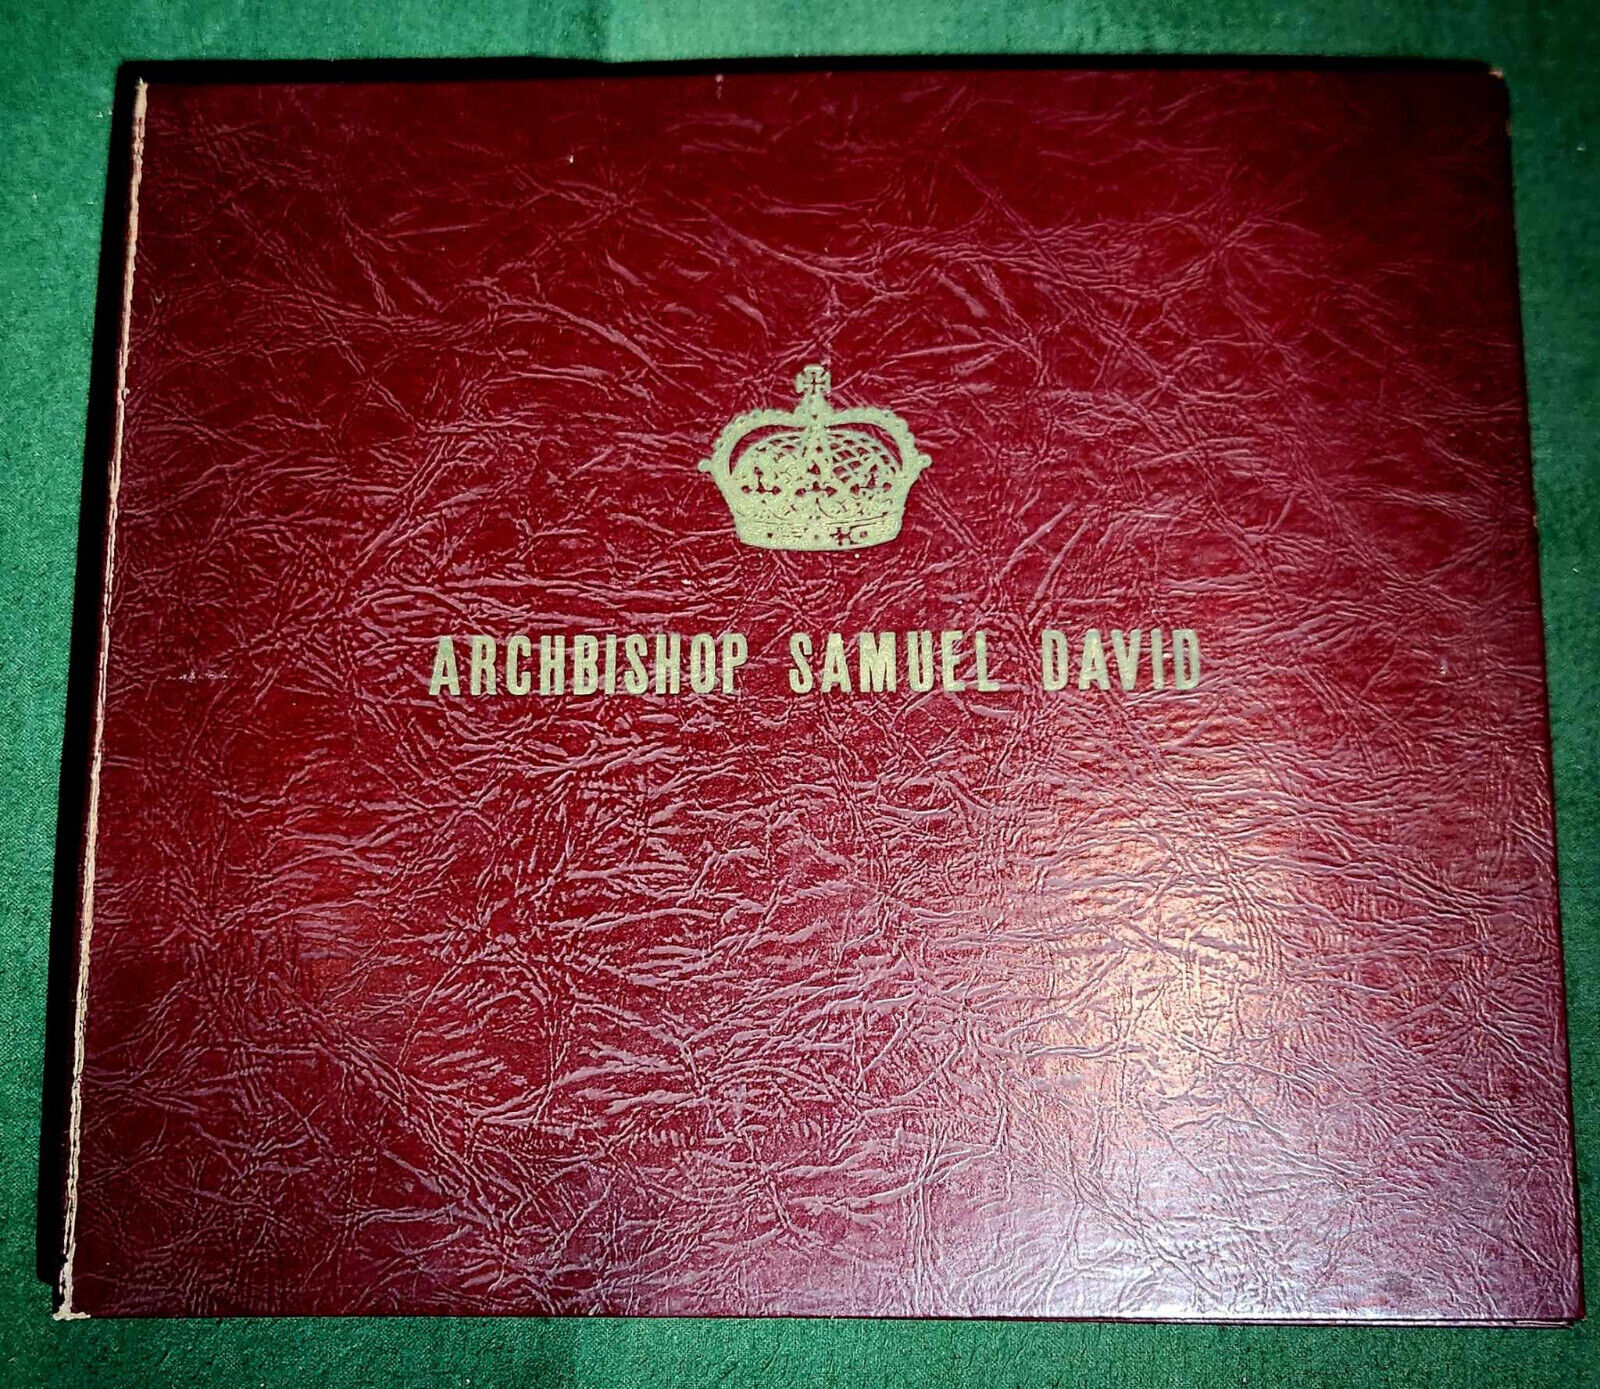 Archbishop Samuel David 1930s Syrian Orthodox 78rpm Vinyl Record Boxset